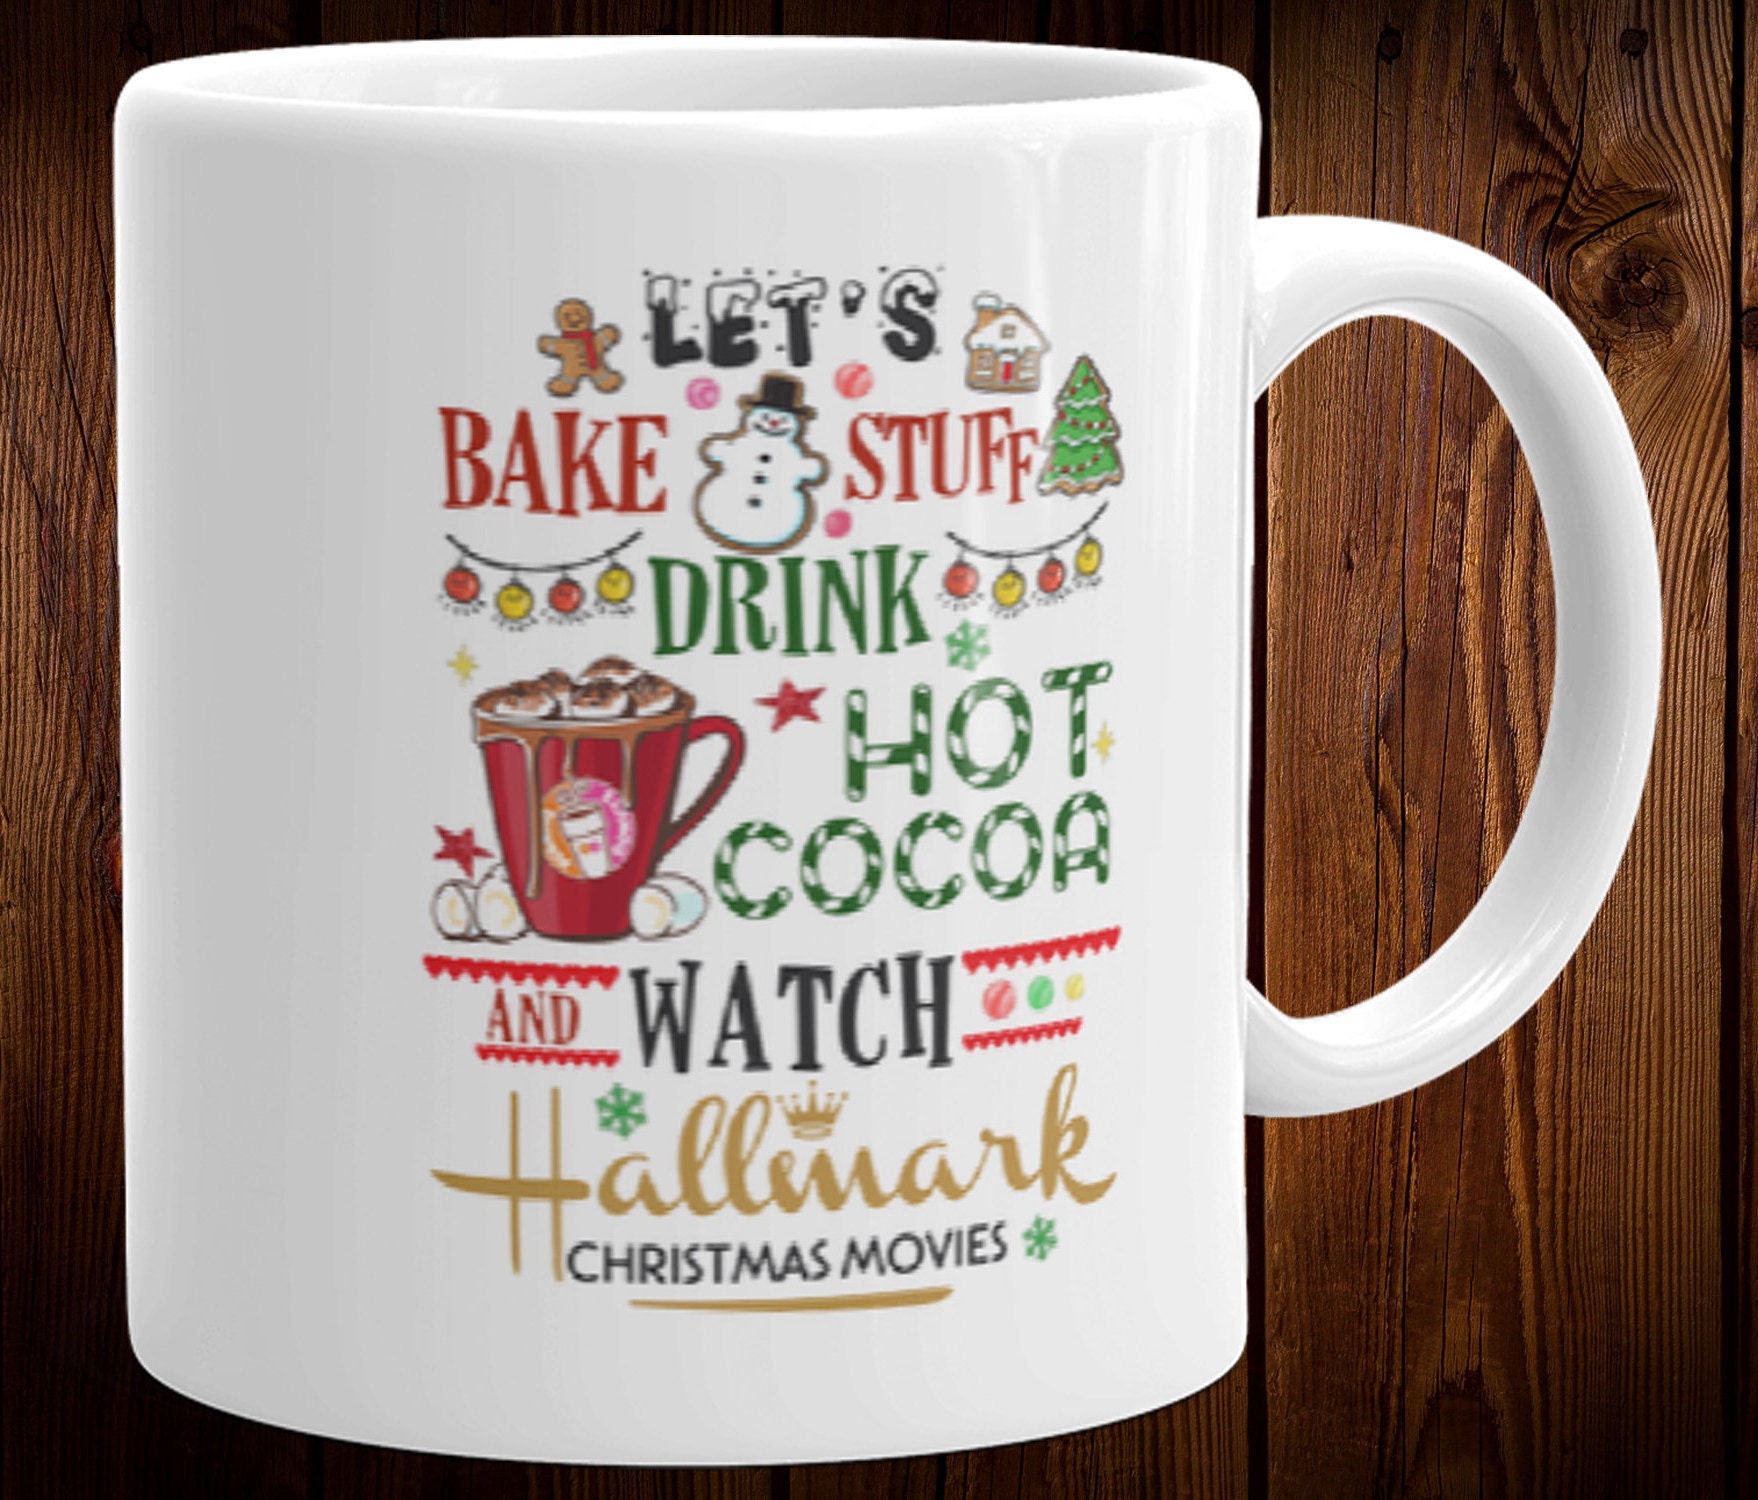 Hot Chocolate Mug, Christmas Coffee Mugs, Funny Mug, Lets Bake Stuff, Drink  Hot Chocolate, Hot Cocoa, Watch Holiday Christmas Movies, 